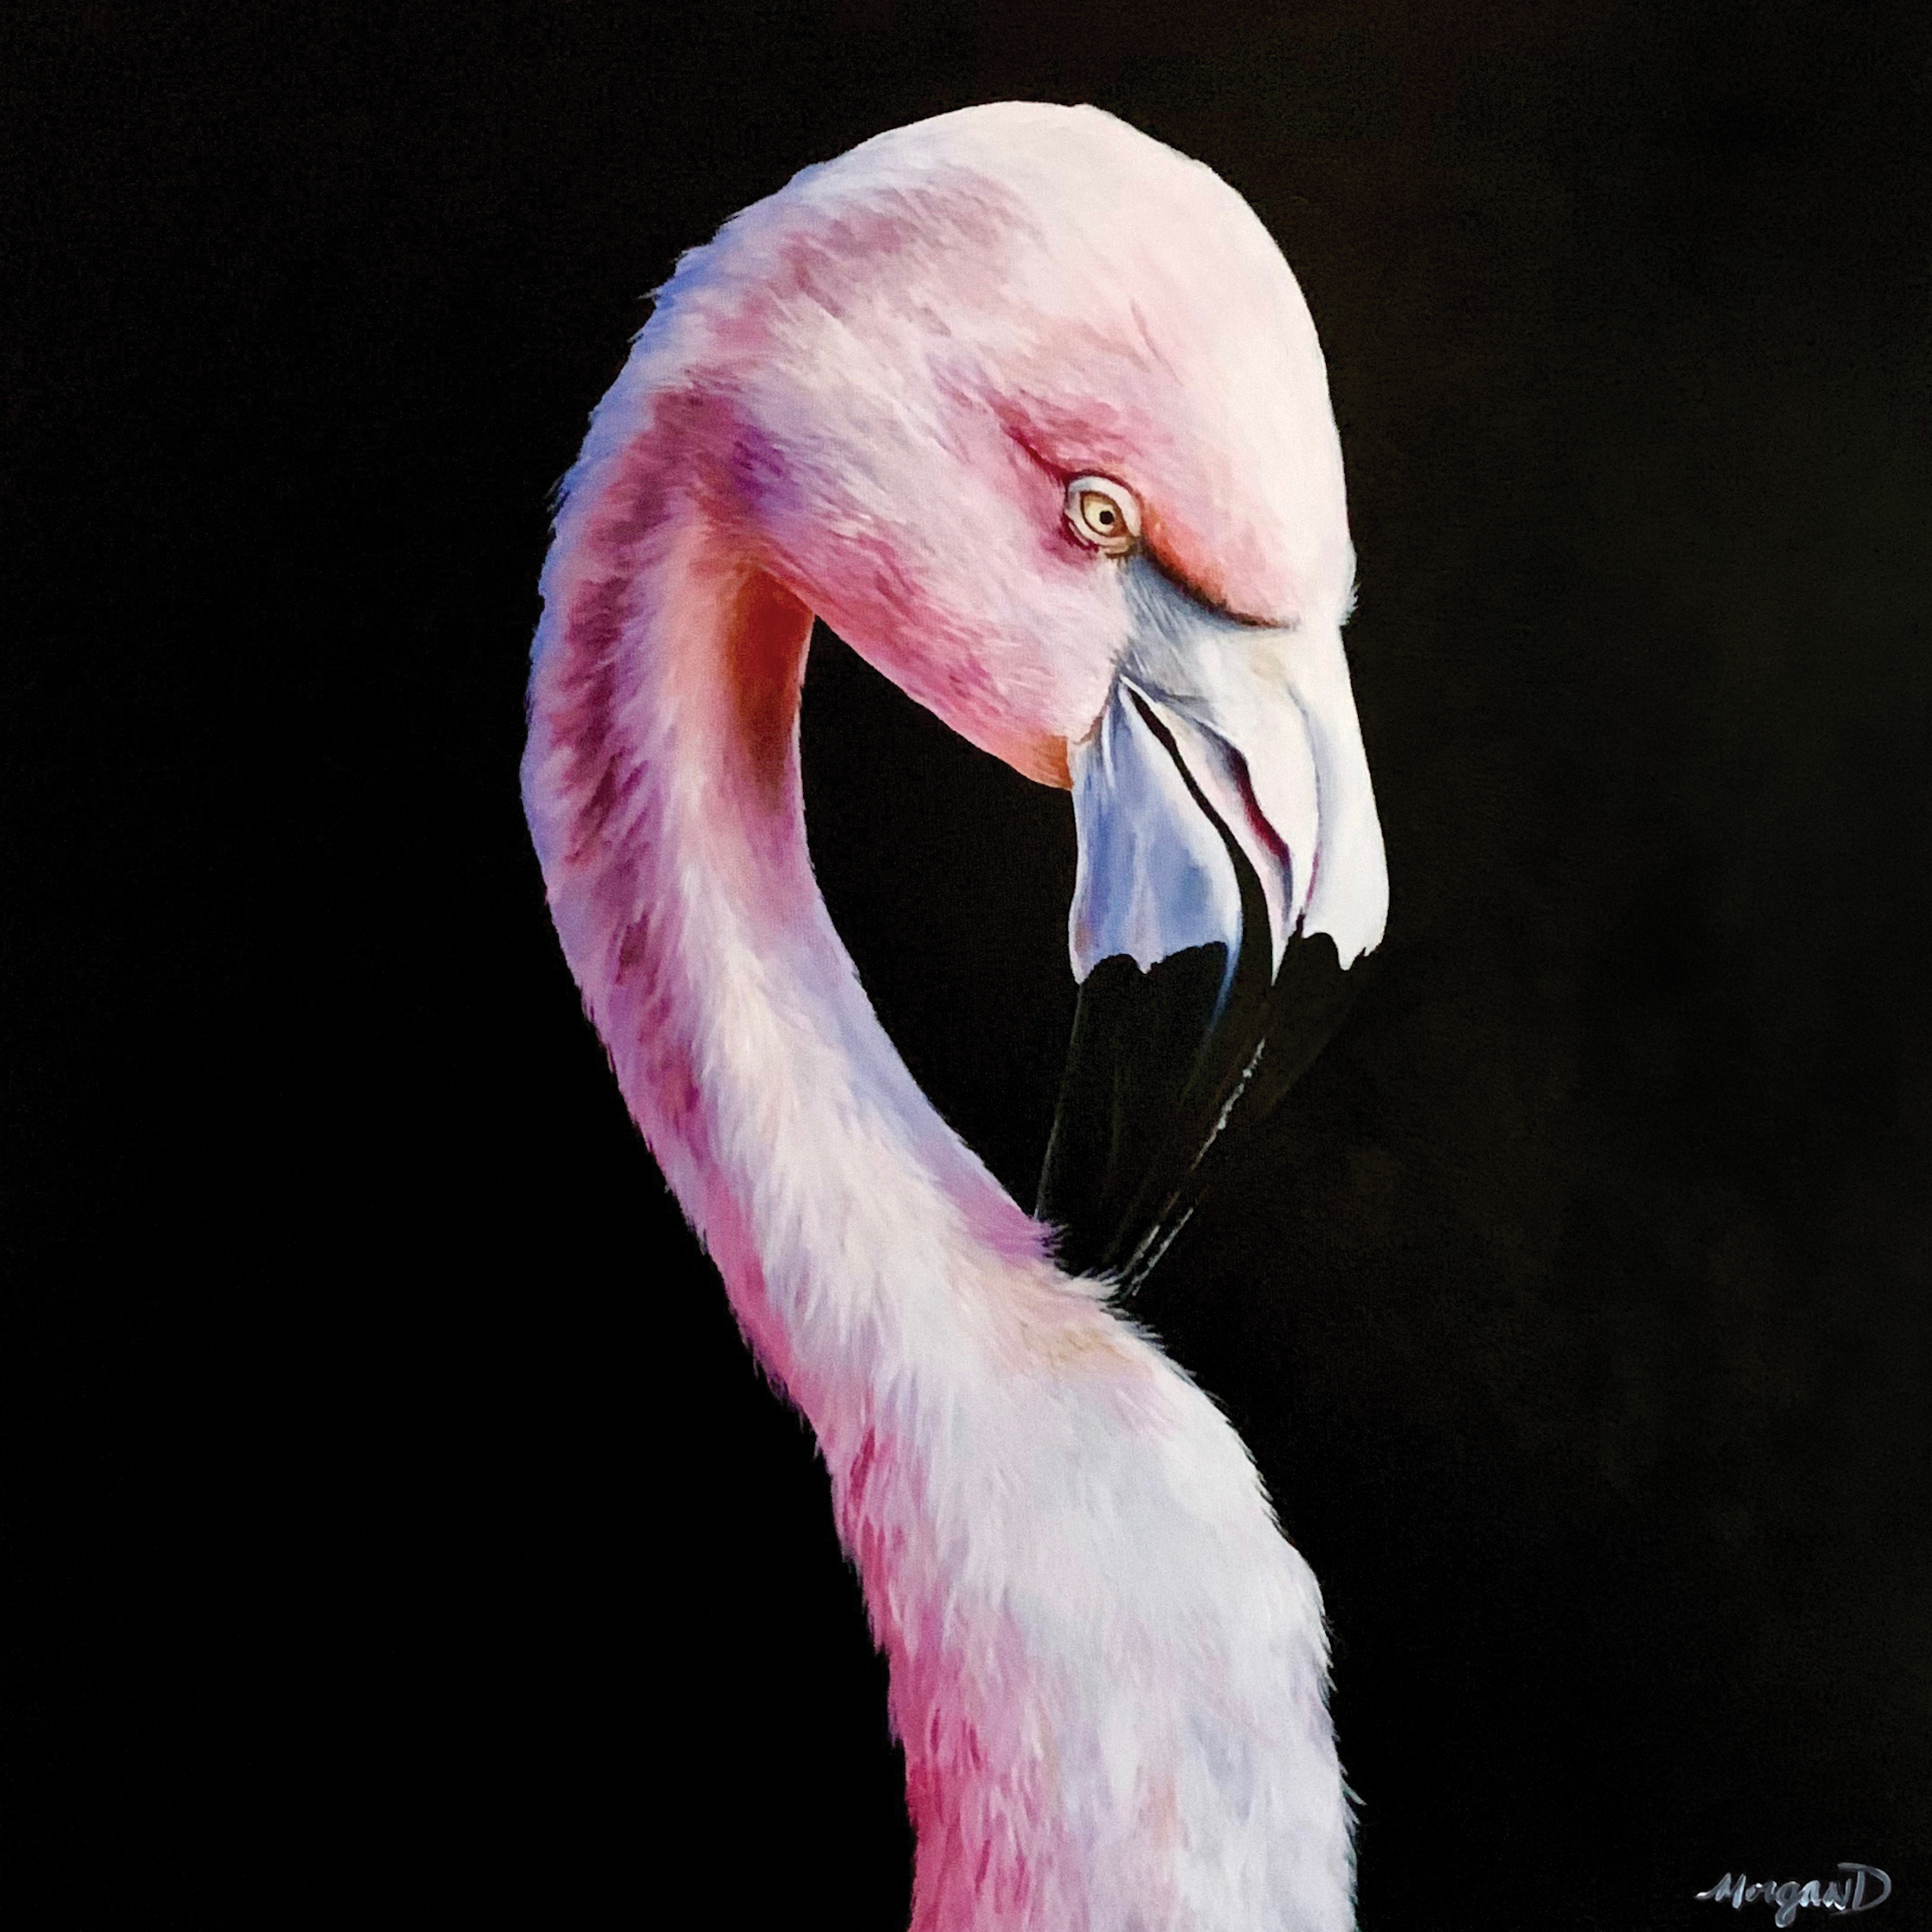 20"x20" Canvas - Flamingo